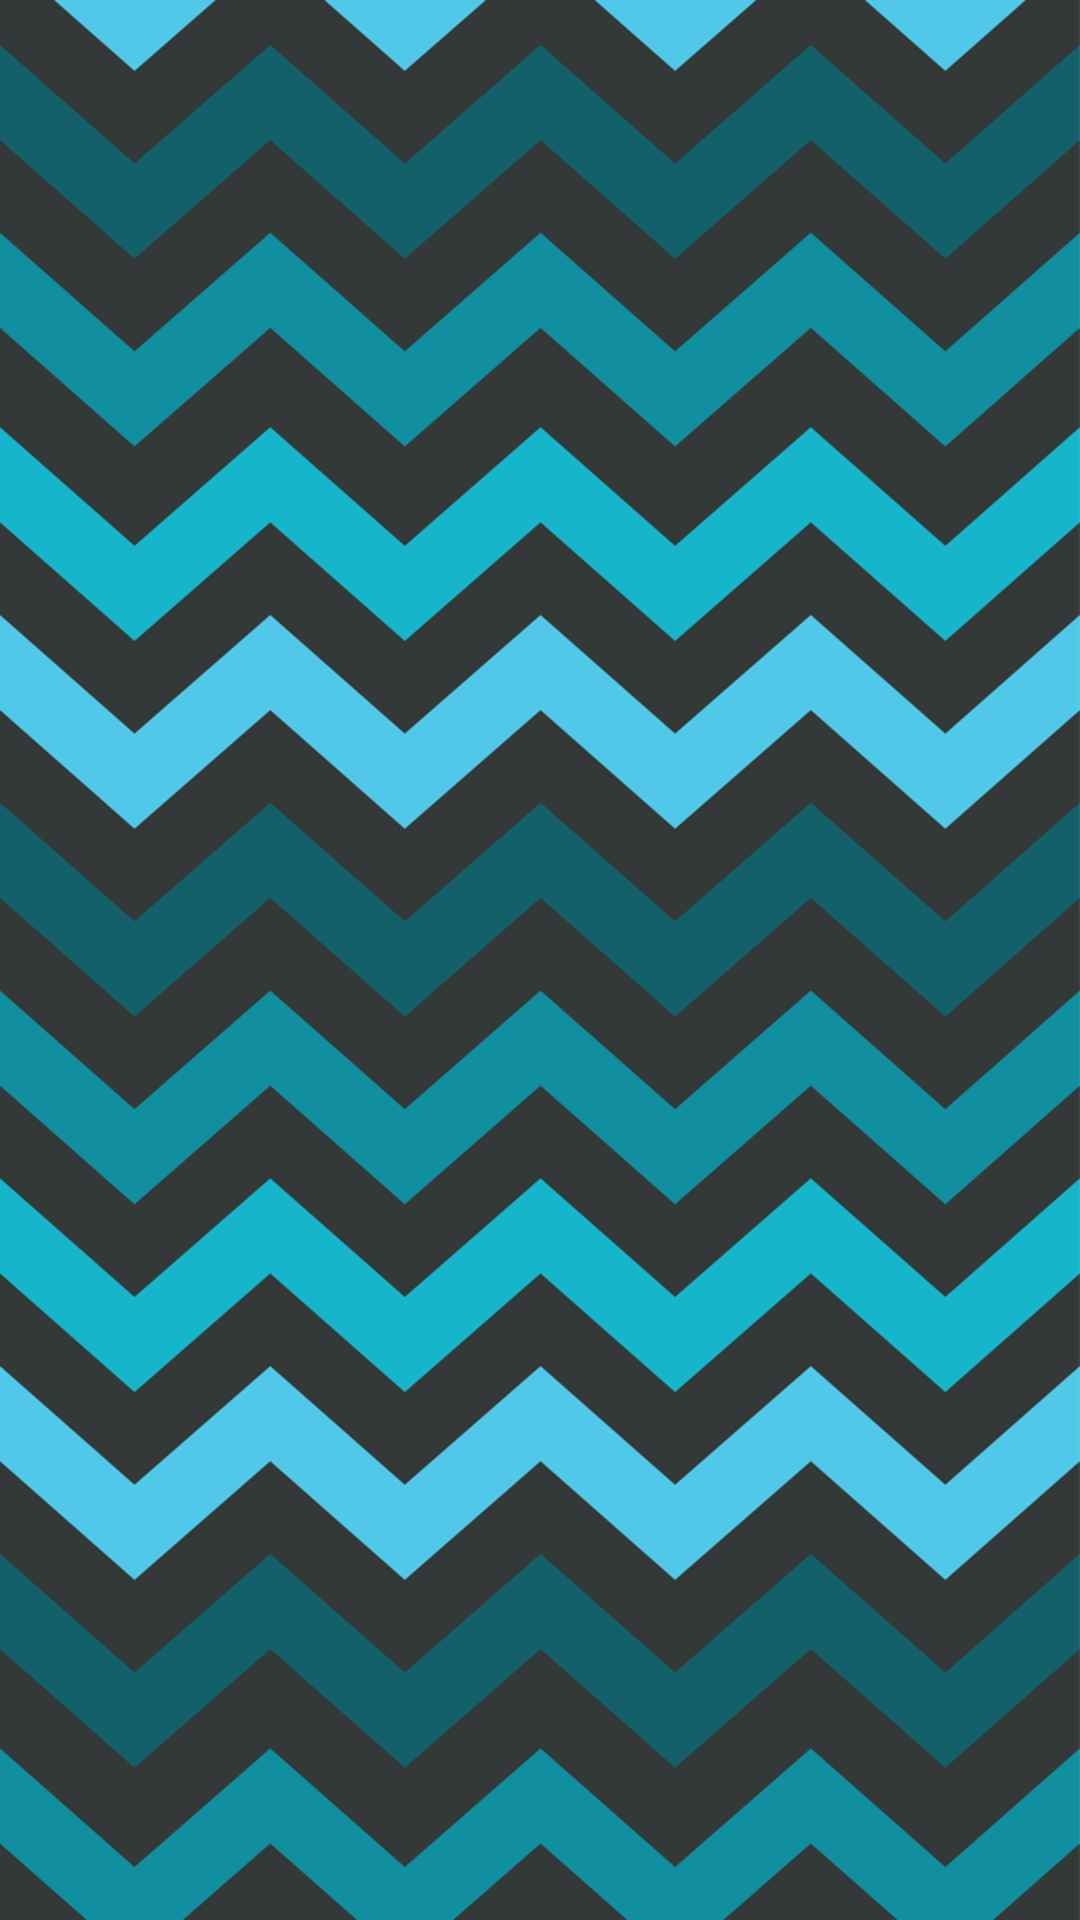 1080x1920 Chevron Dim Blue and Black iPhone 6 Plus Wallpaper - Zigzag Pattern,  #iPhone #